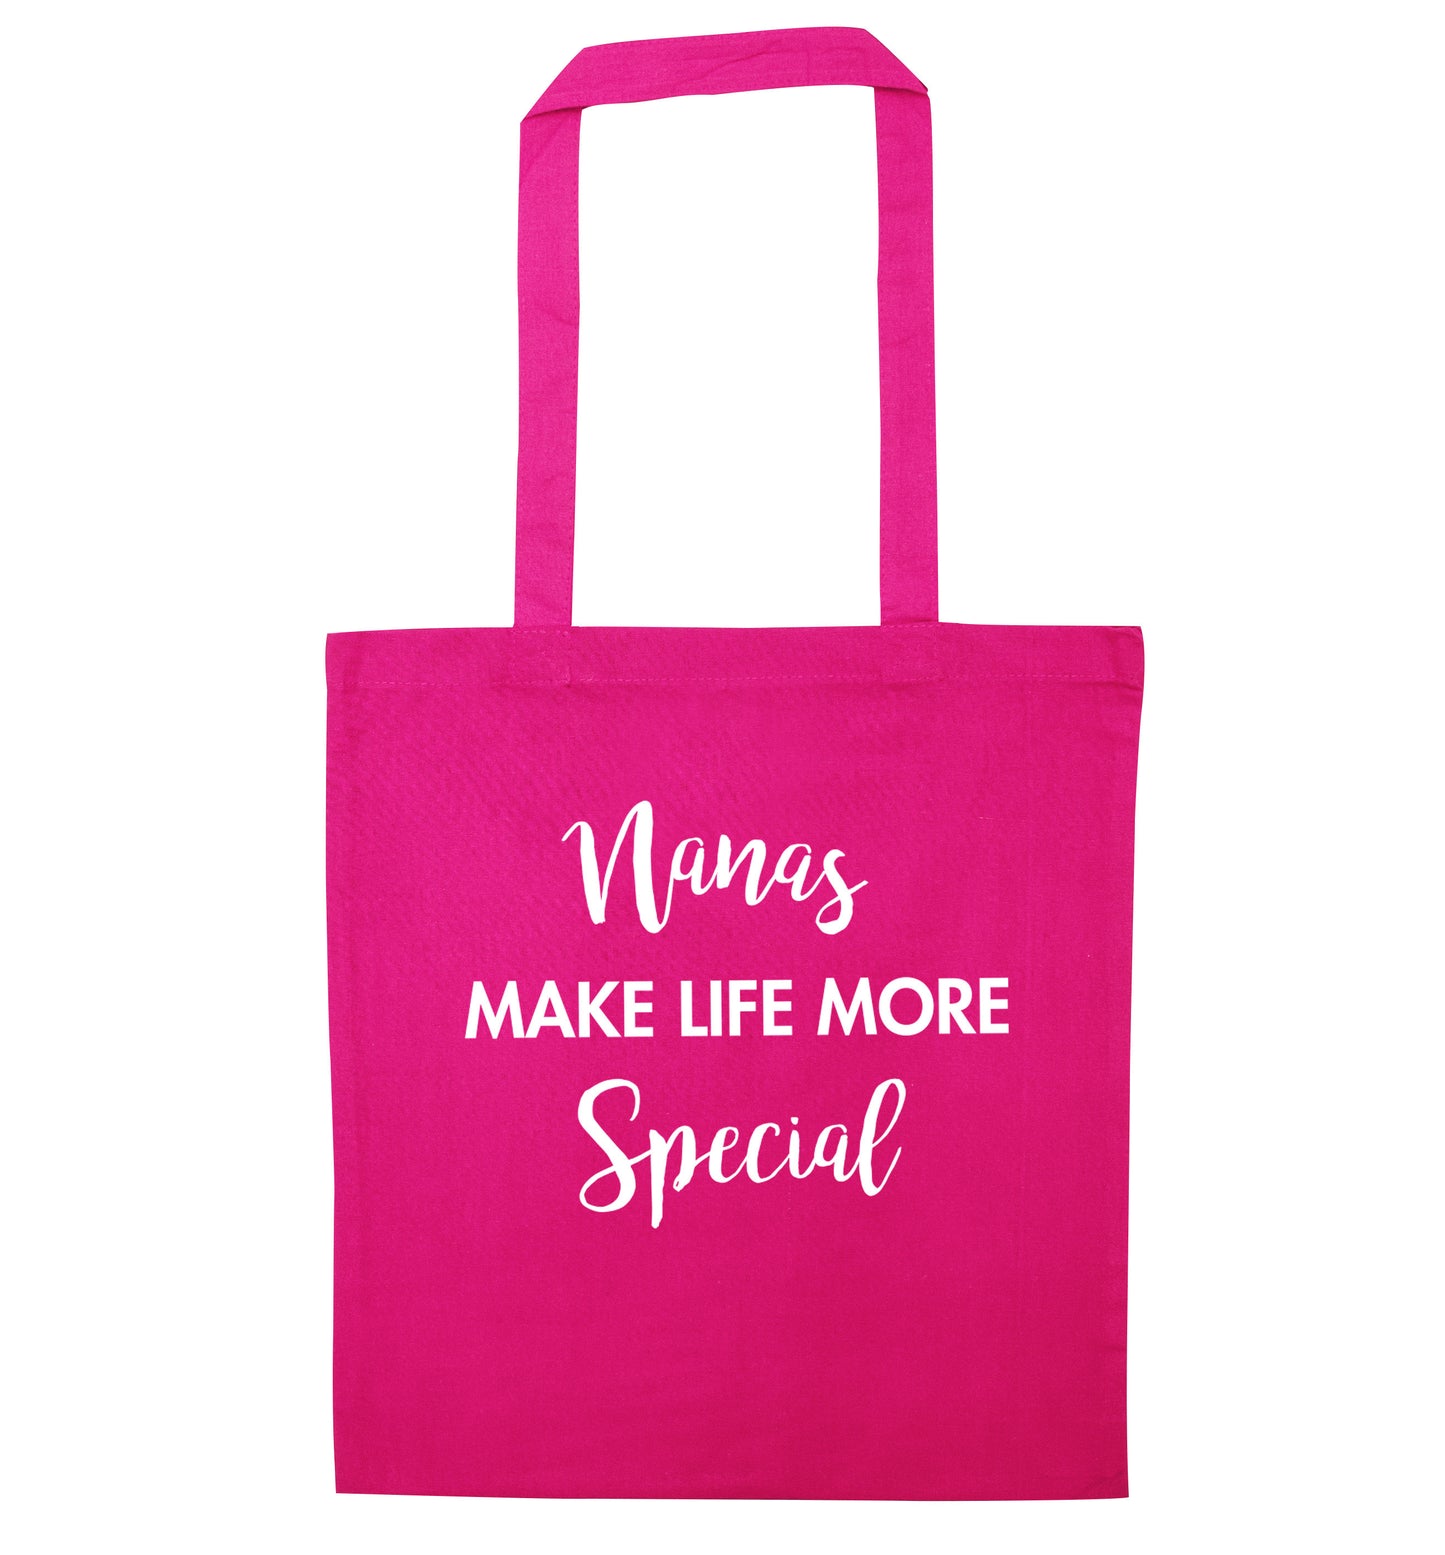 Nanas make life more special pink tote bag